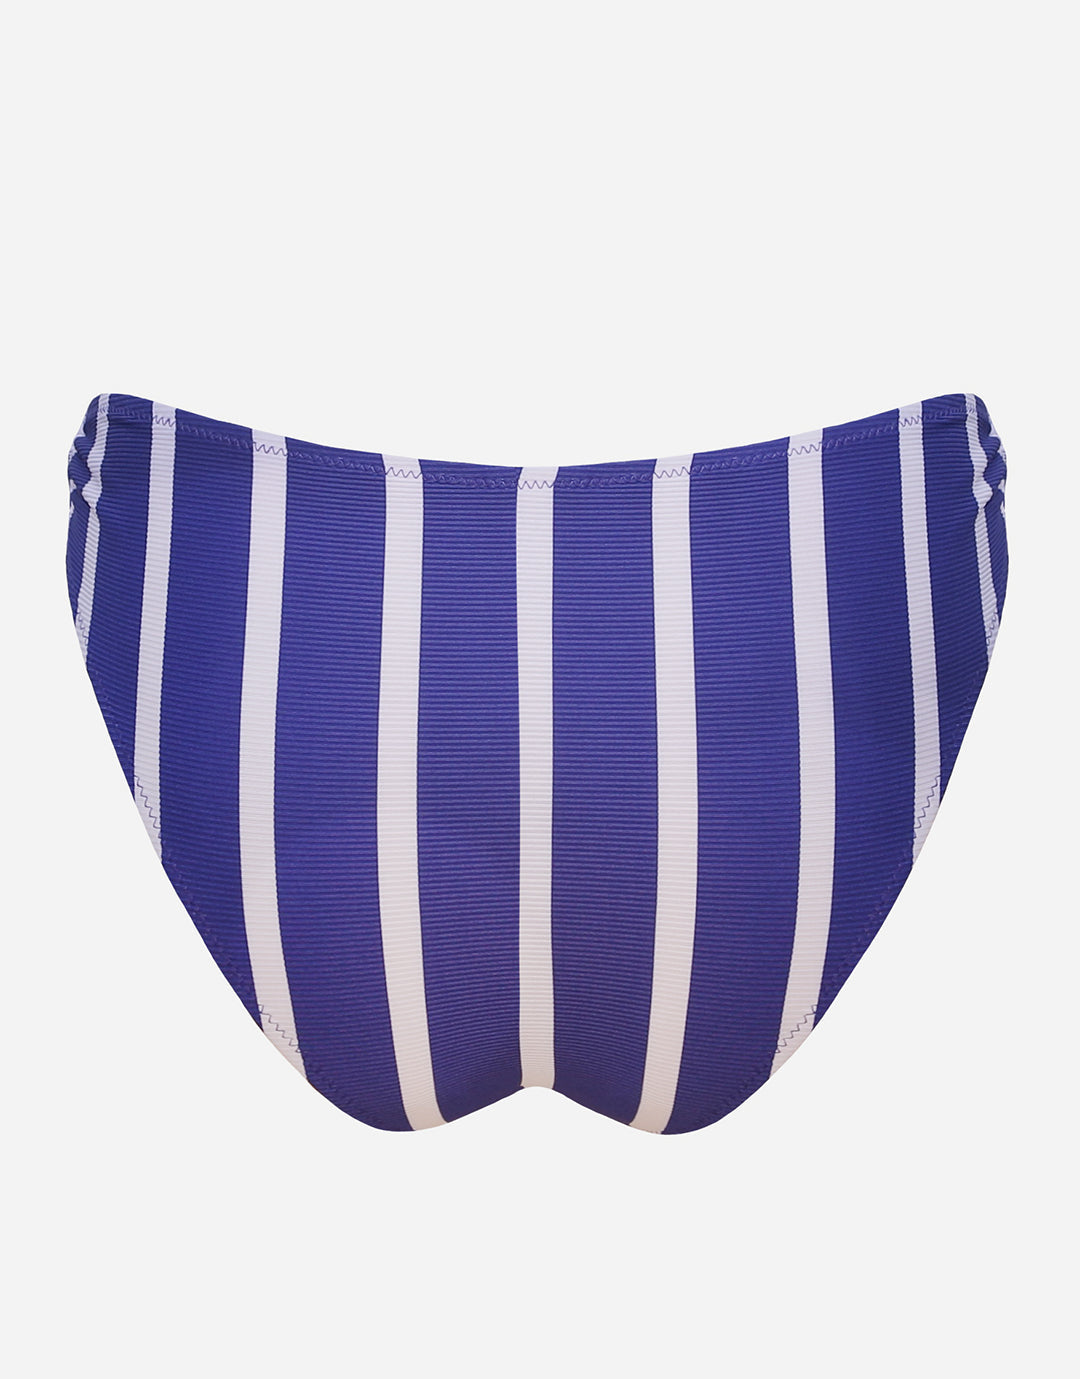 Sea Ride Loop Side Bikini Pant - White Indigo - Simply Beach UK